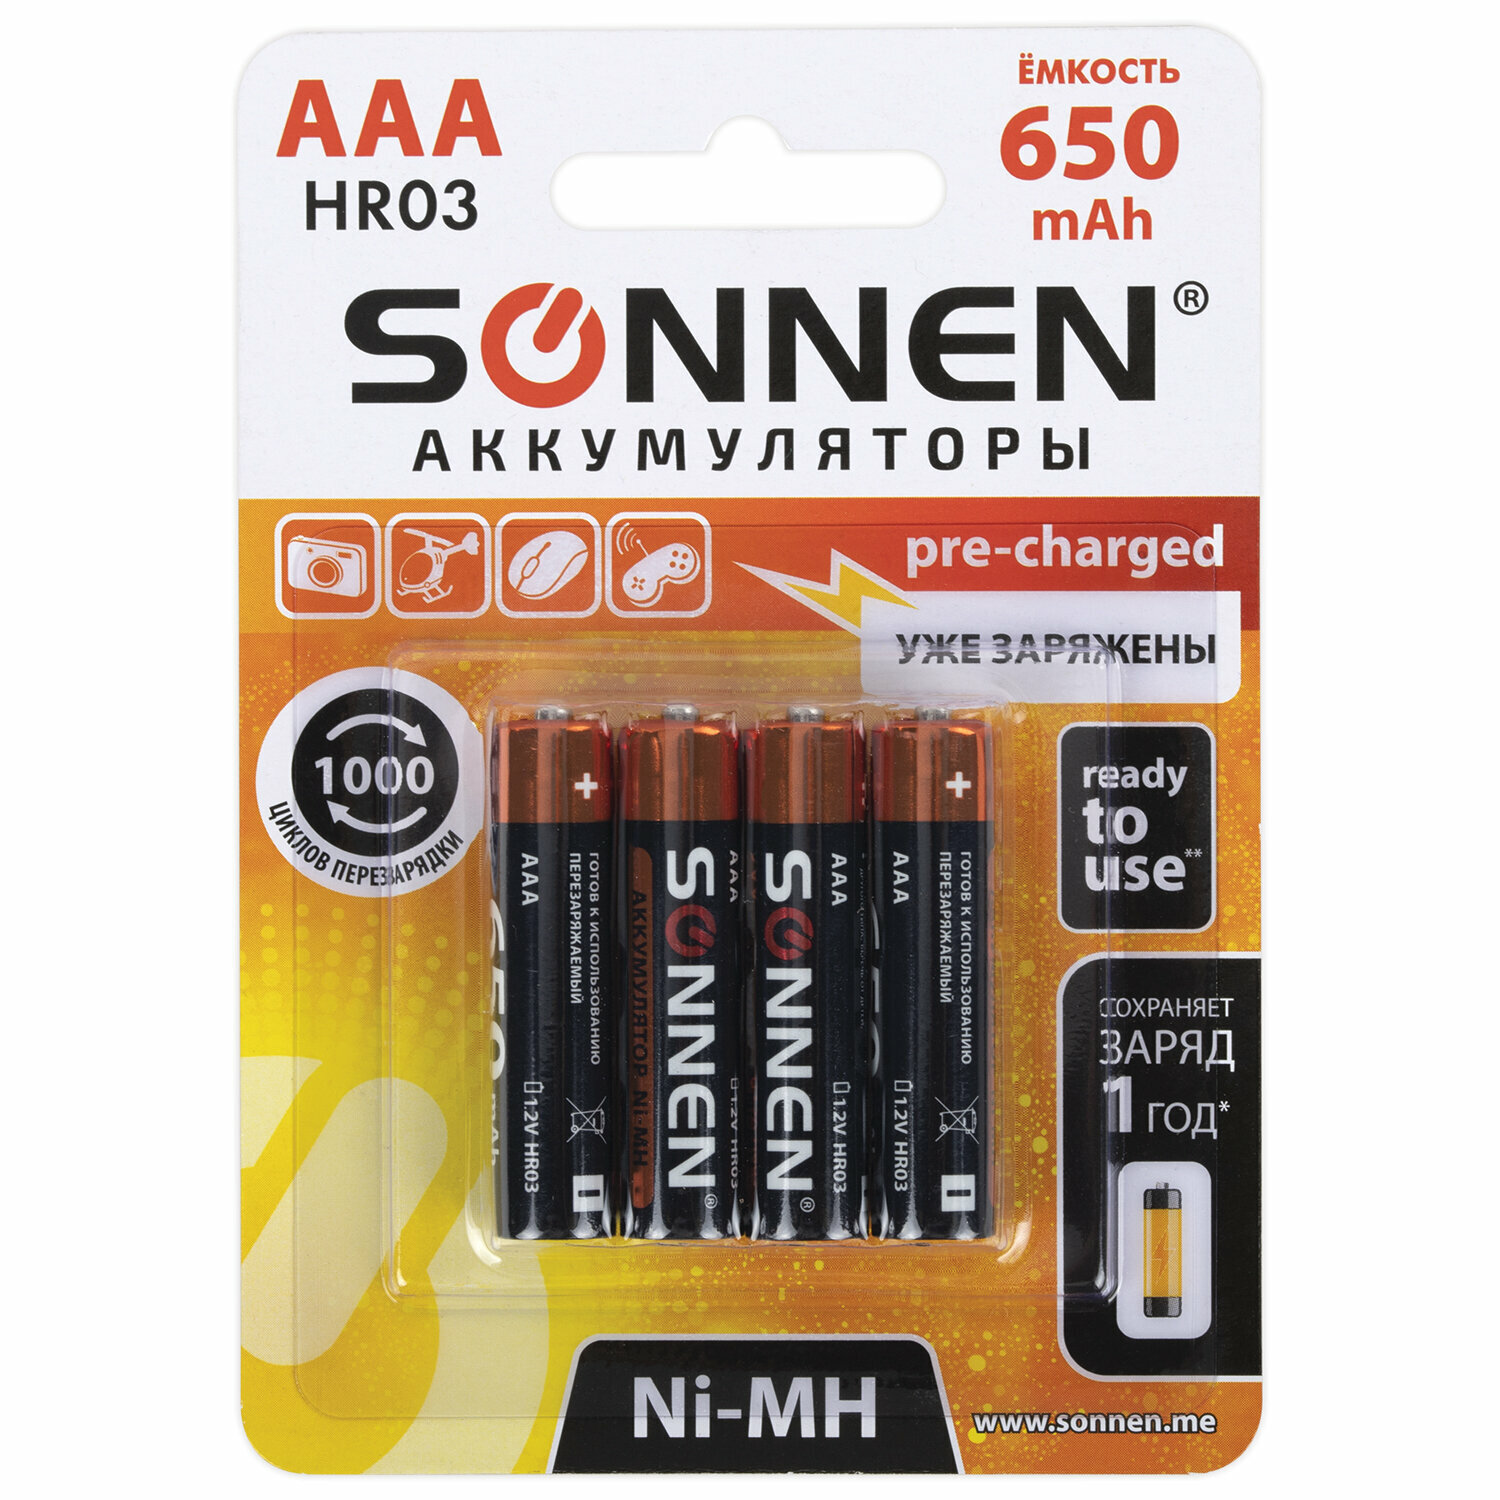 Батарейки аккумуляторные комплект 4 шт ААA (HR03) 650 mAh SONNEN Ni-Mh в блистере 455609